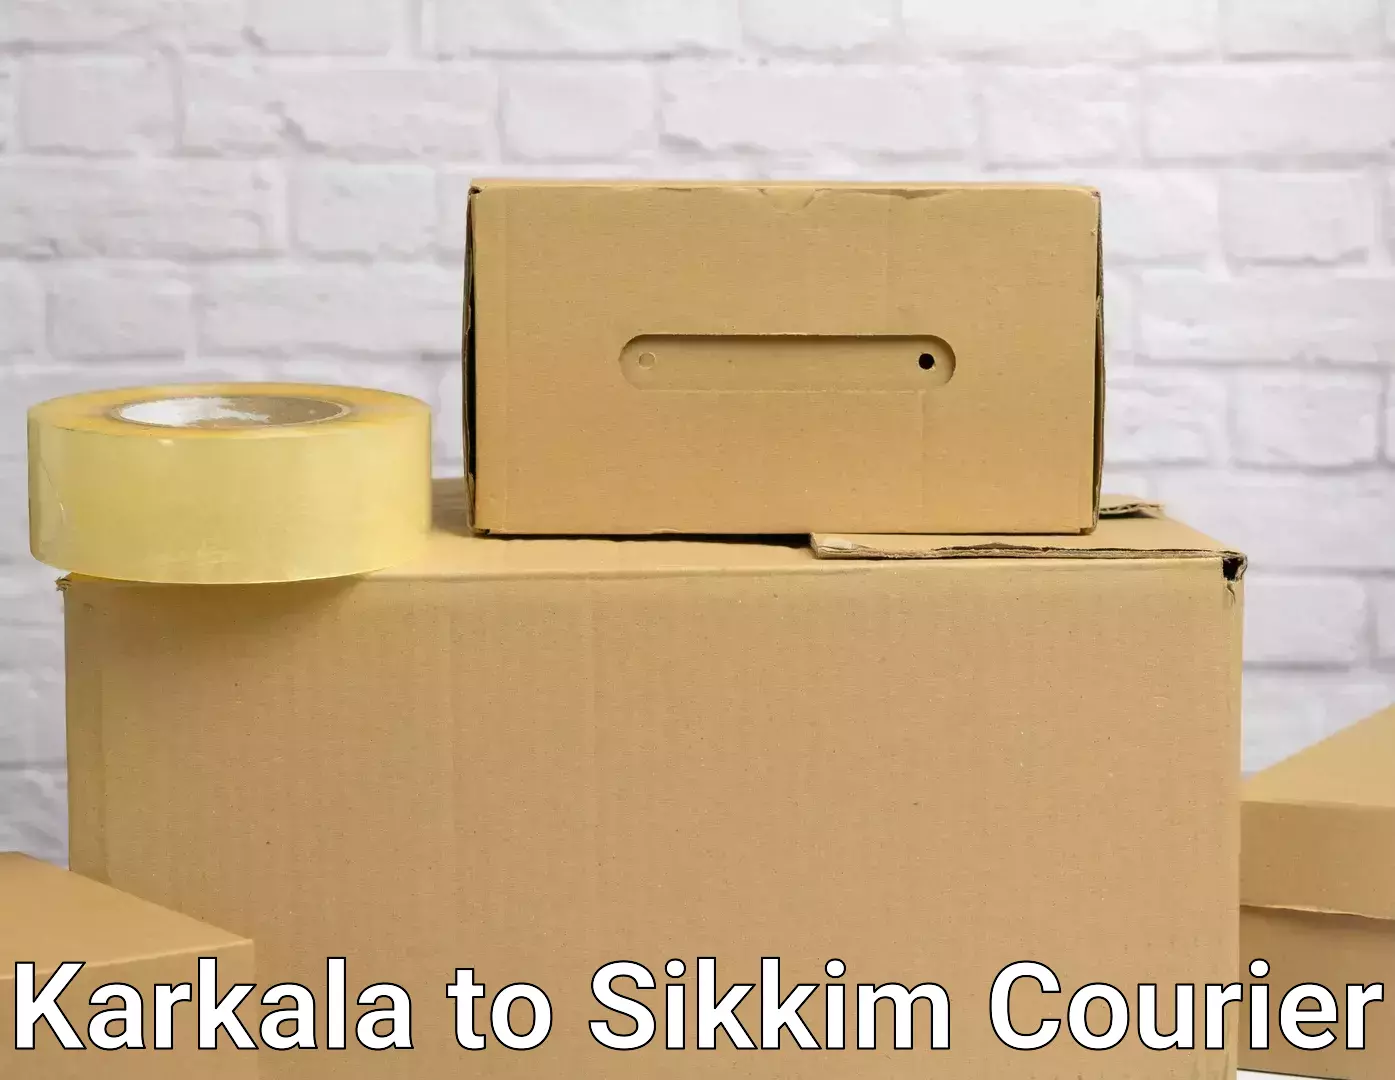 Home goods moving company Karkala to Pelling